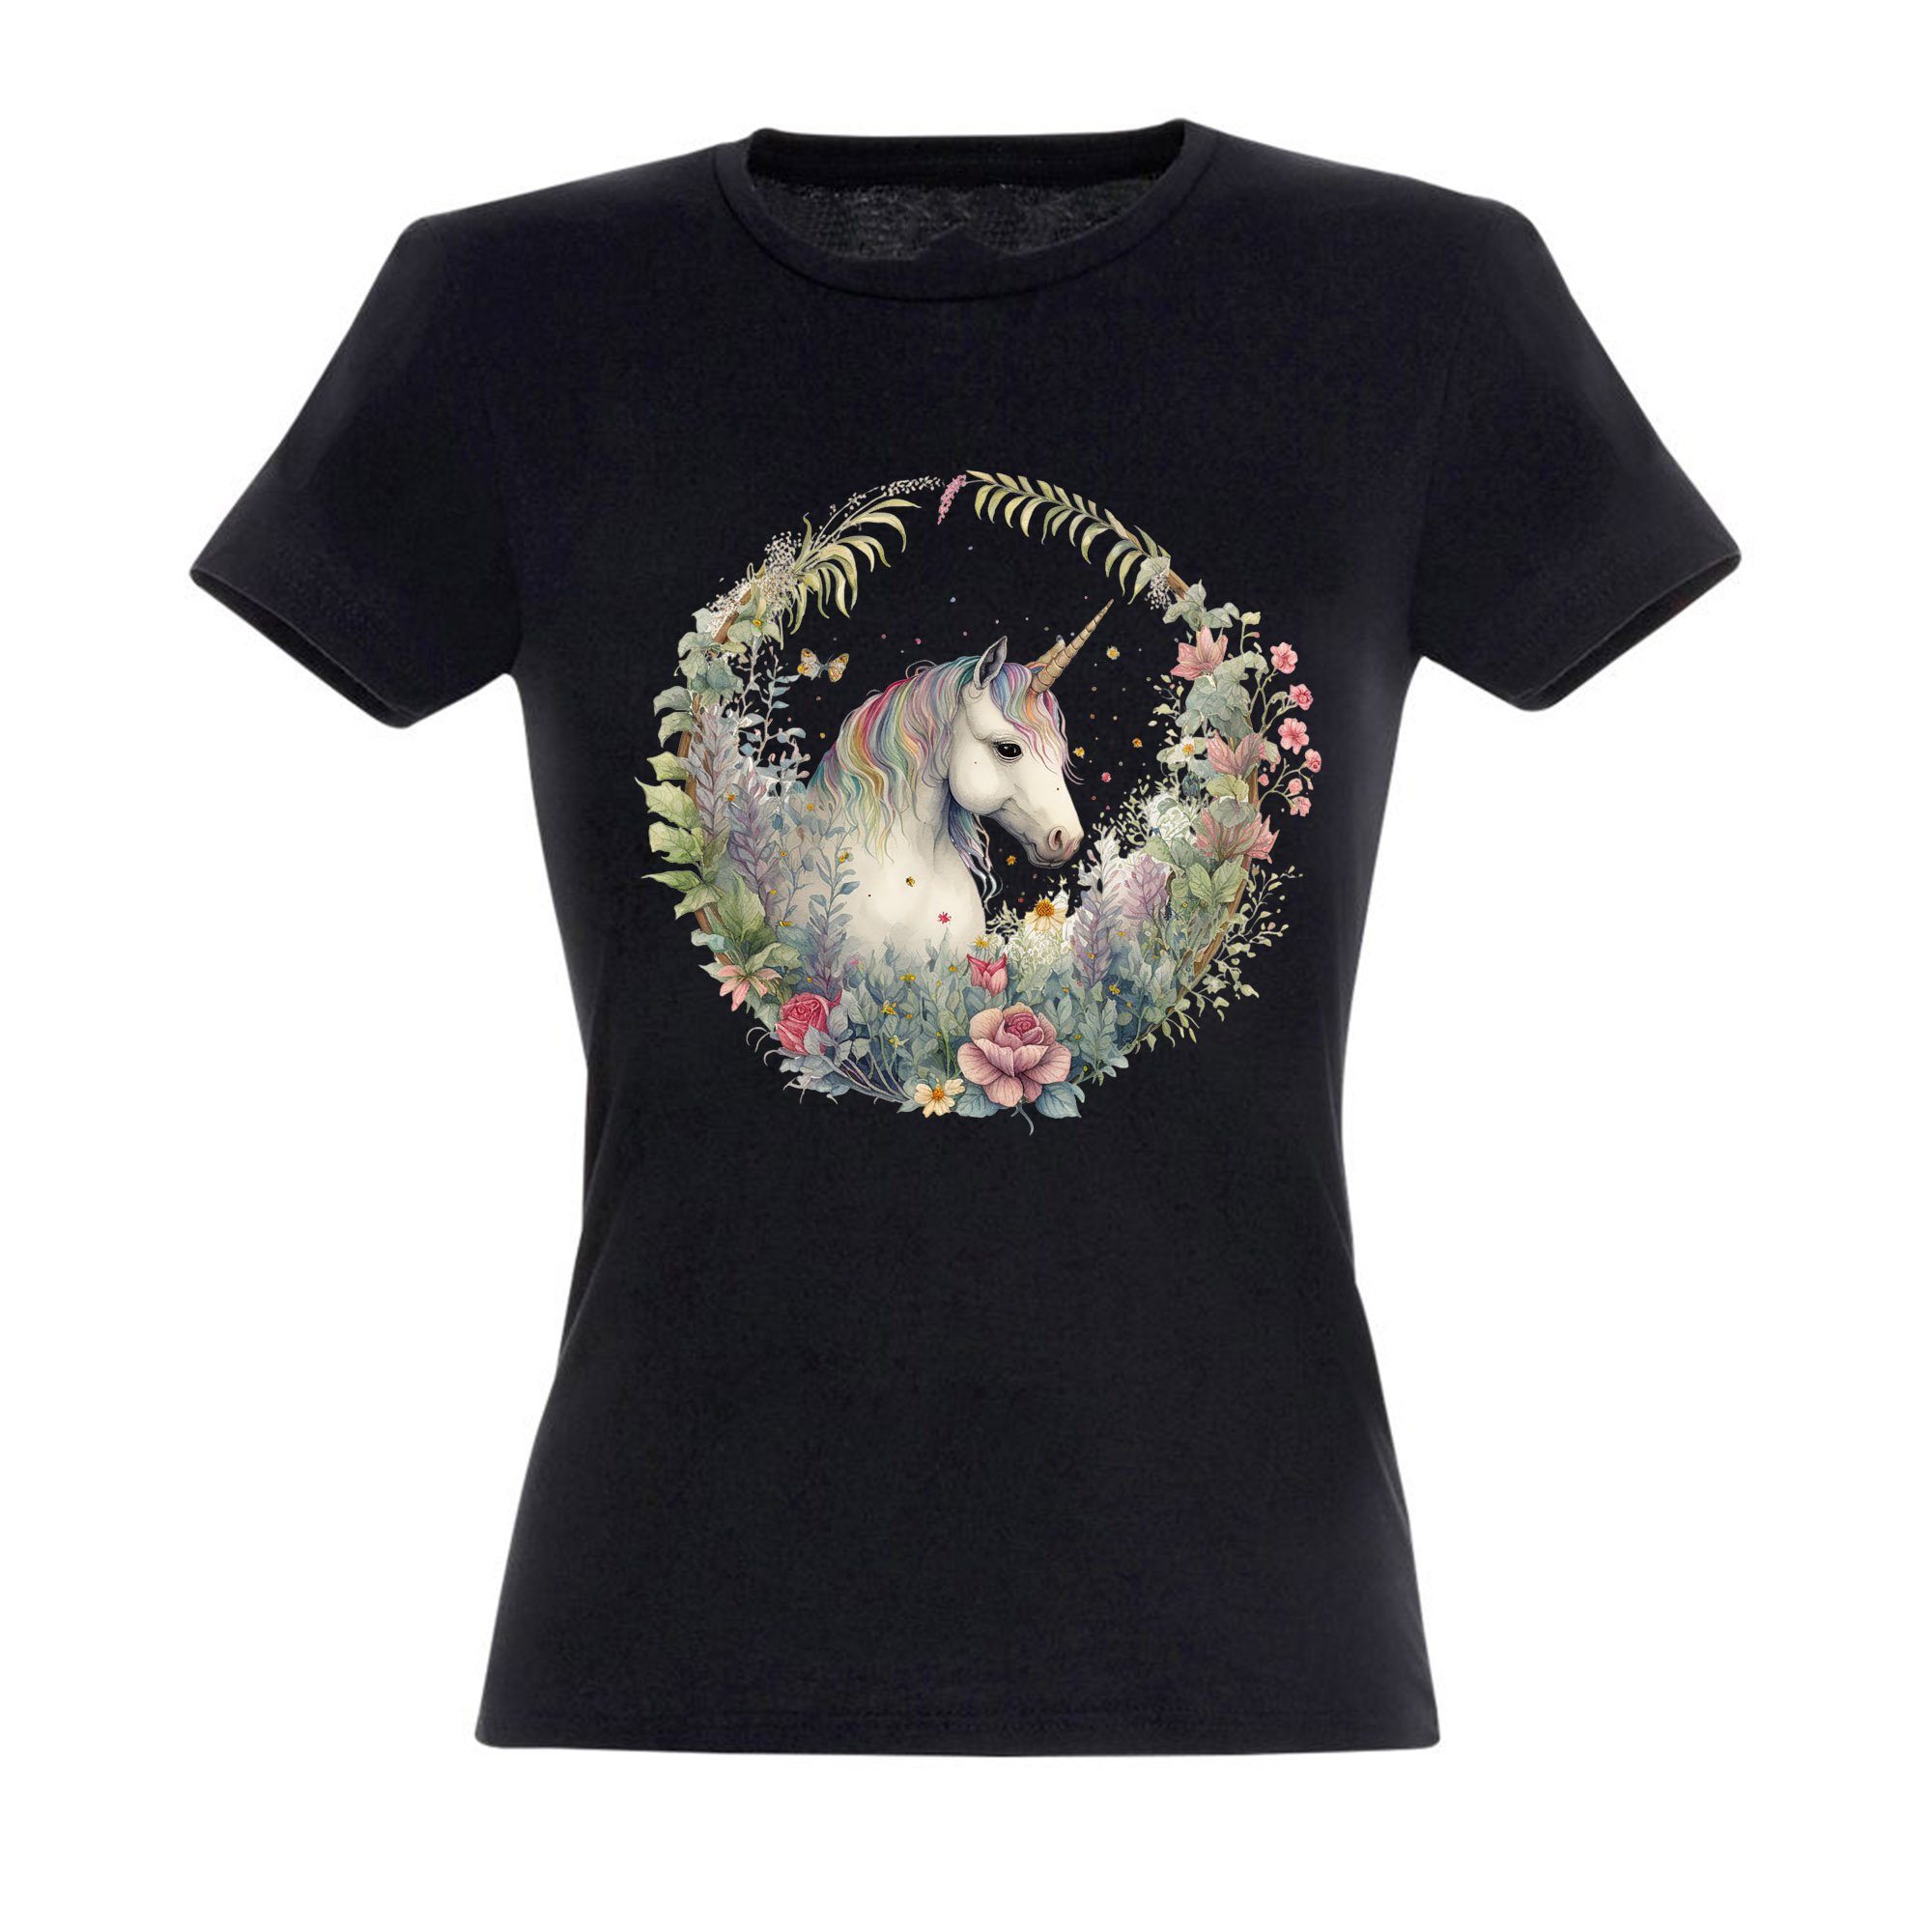 Banco T-Shirt Banco Unicorn T-Shirt mit Unicorn im Kranz Druck Damen Sommermode Schwarz